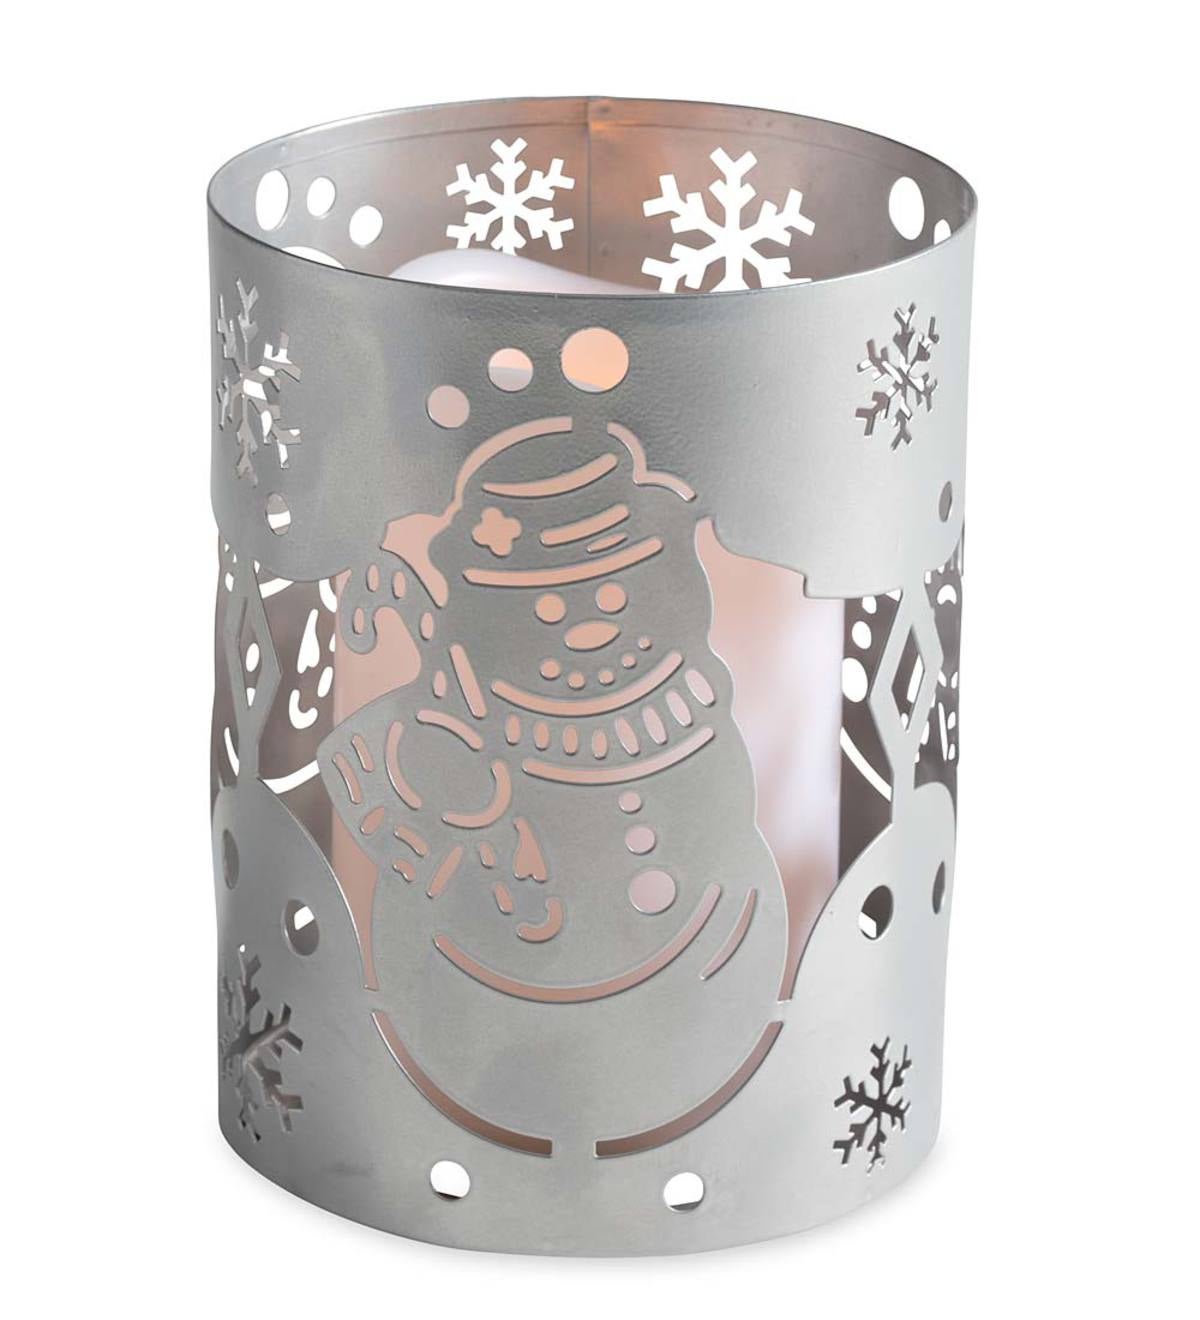 LED Lighted Holiday Metal Lantern - Snowman